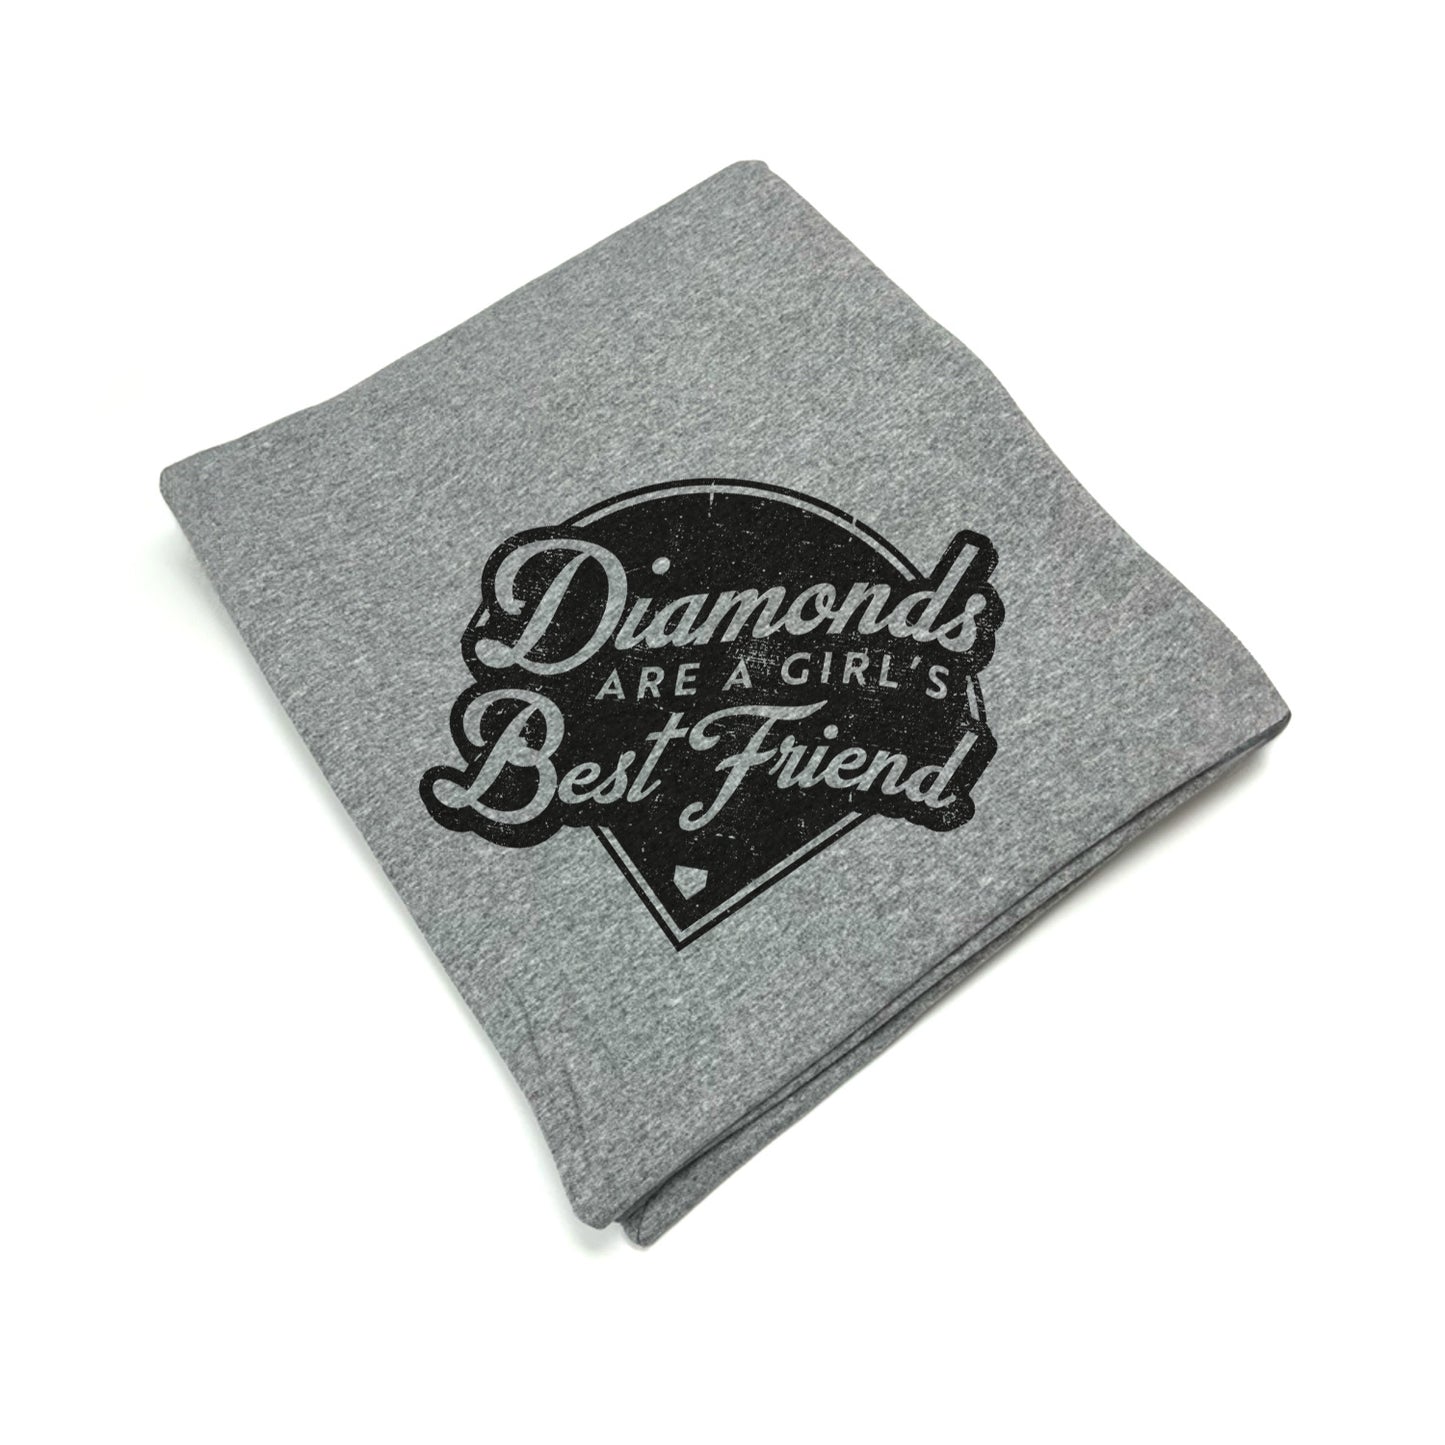 Diamonds Are A Girl's Best Friend (Blanket)